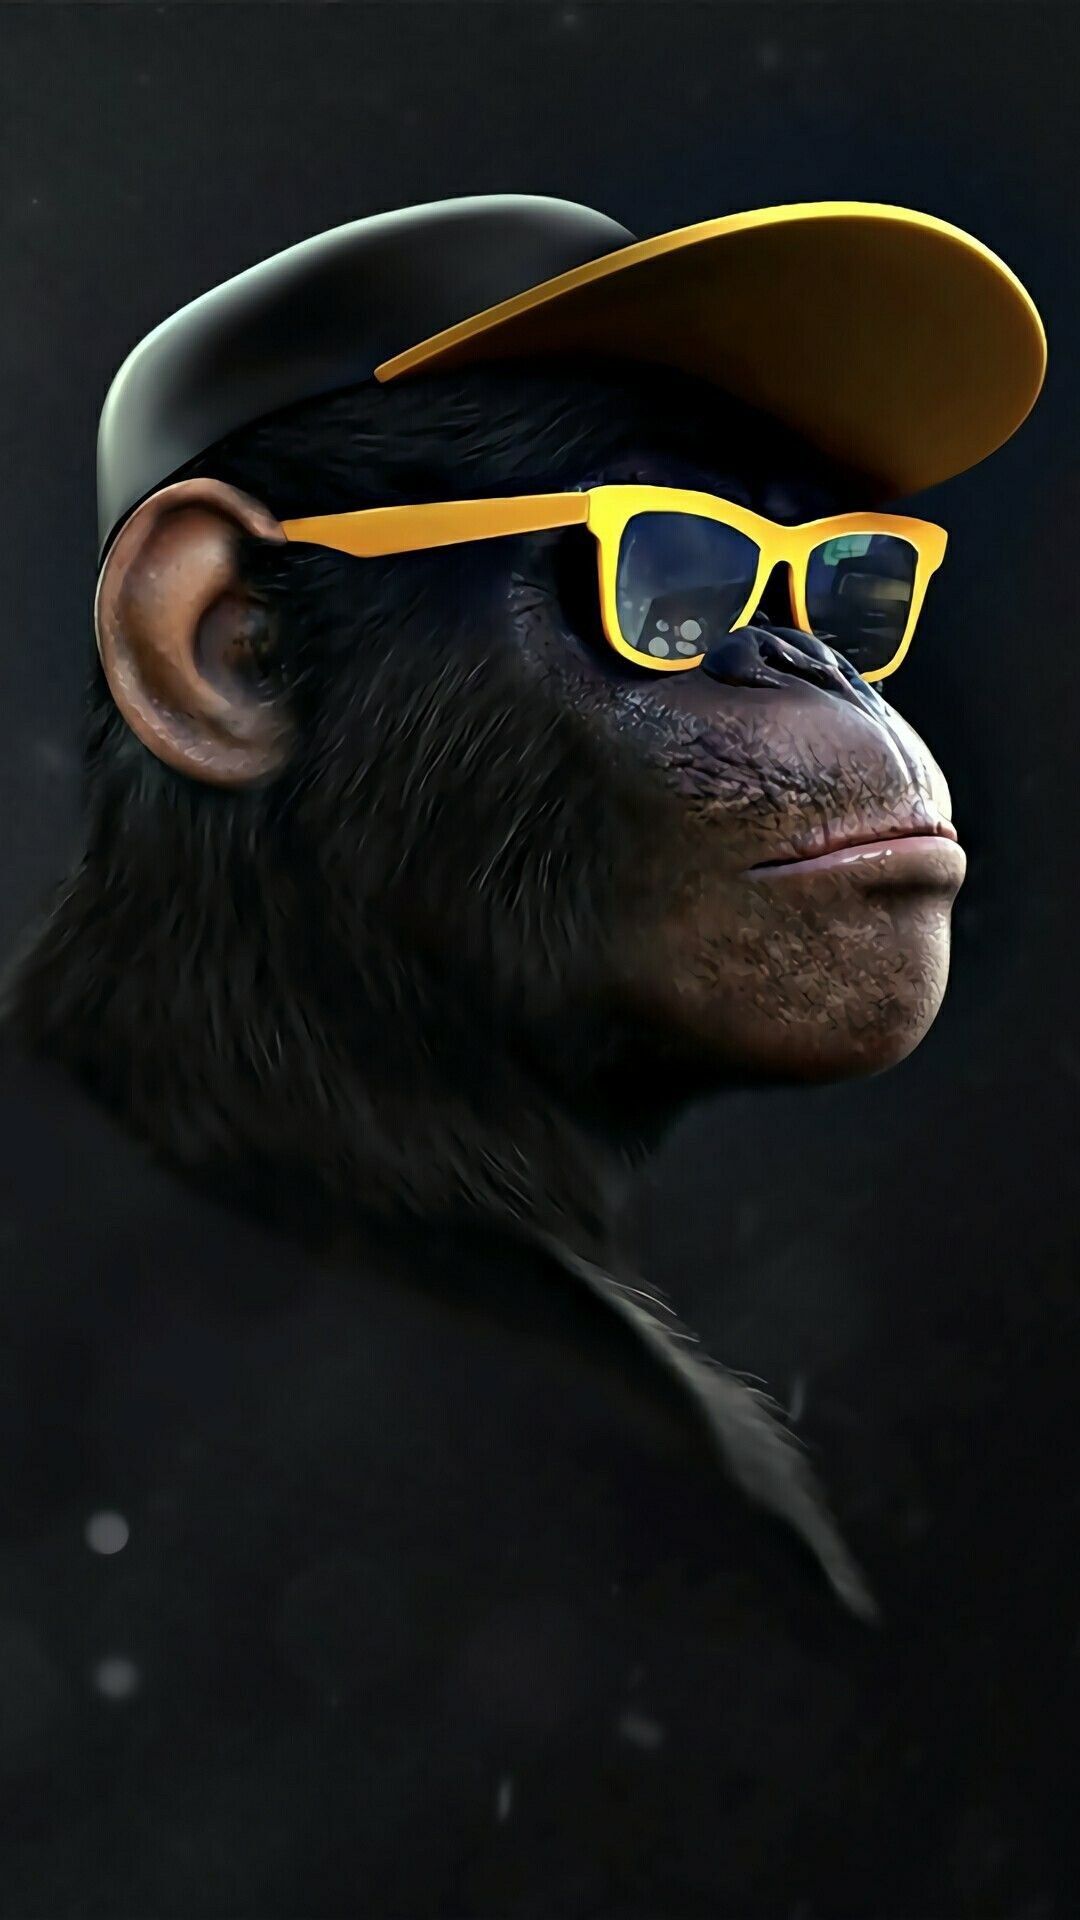 mono fondos de pantalla iphone,gafas,vasos,frio,chimpancé común,gafas de sol